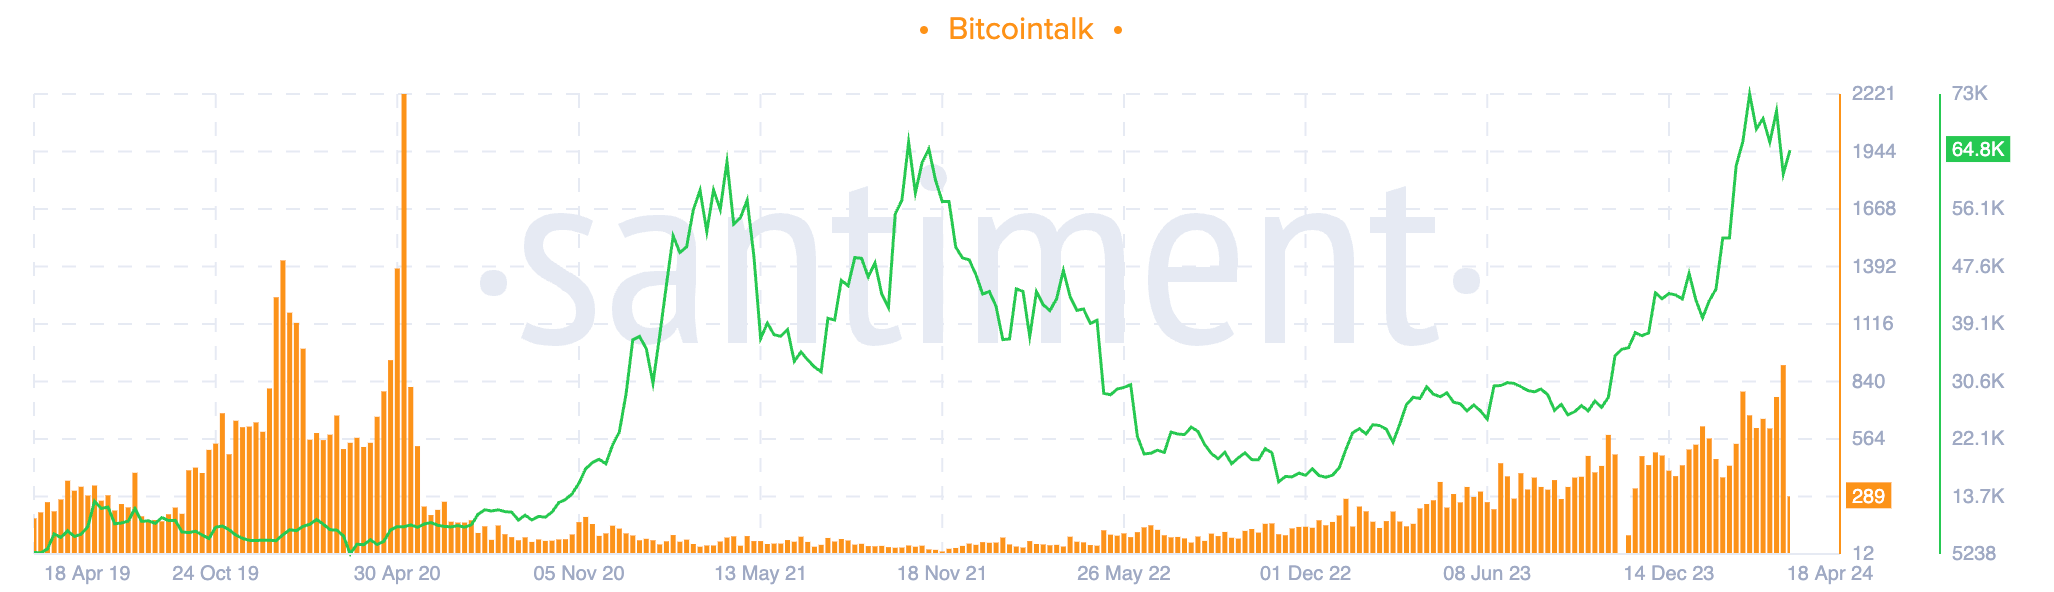 Bitcoin halving Bitcointalk interest (Santiment)